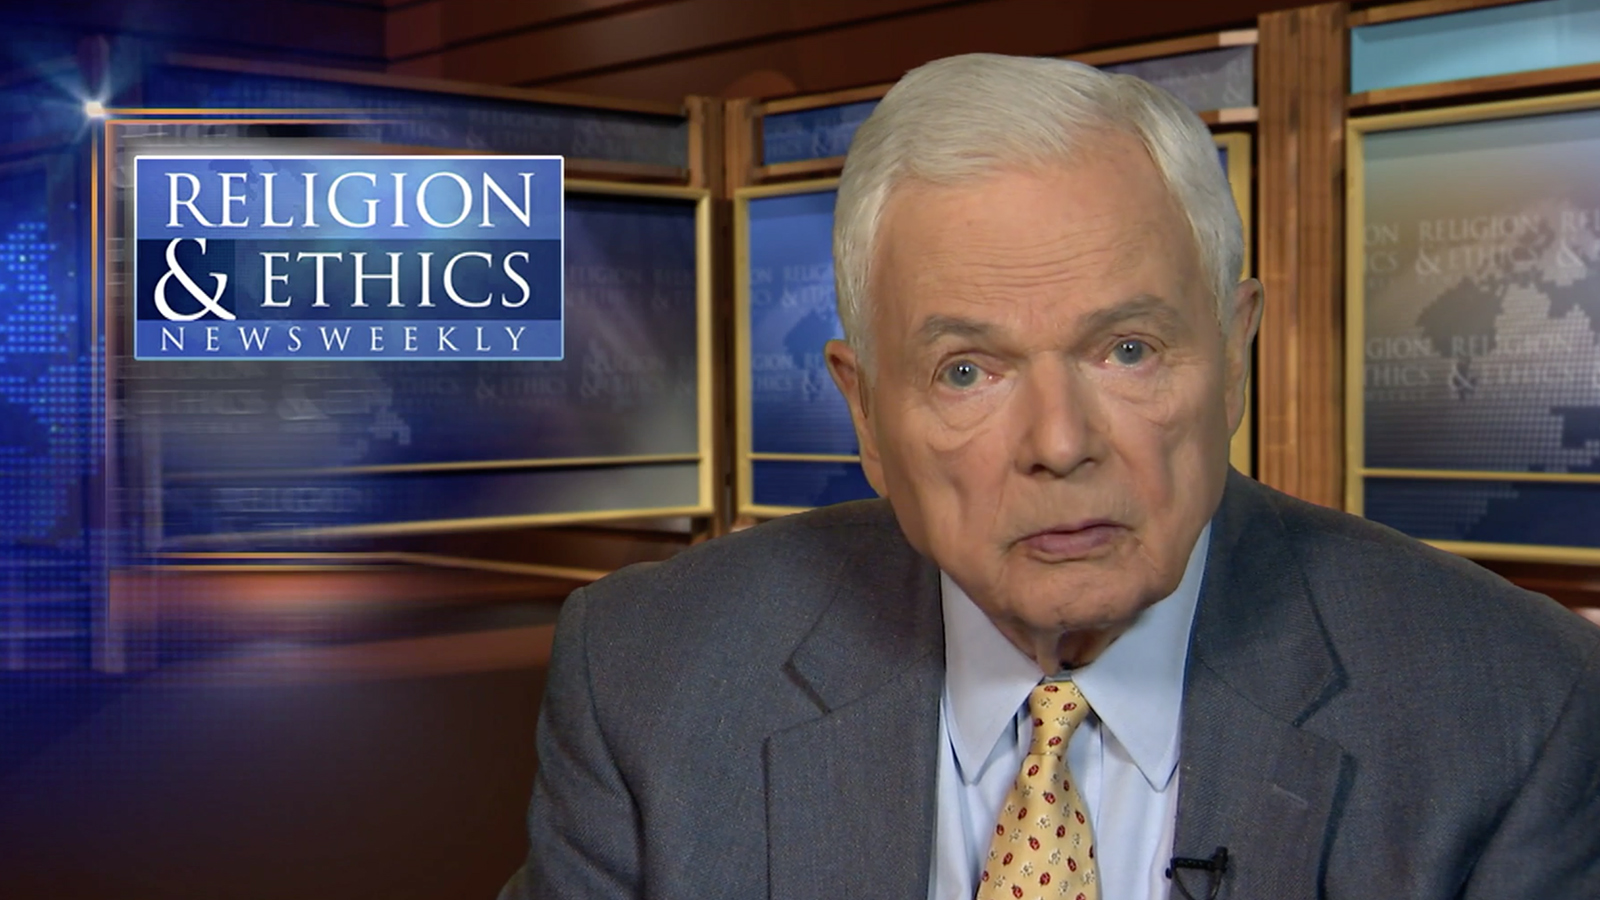 Bob Abernethy on the set of Religion & Ethics NewsWeekly. Video screengrab